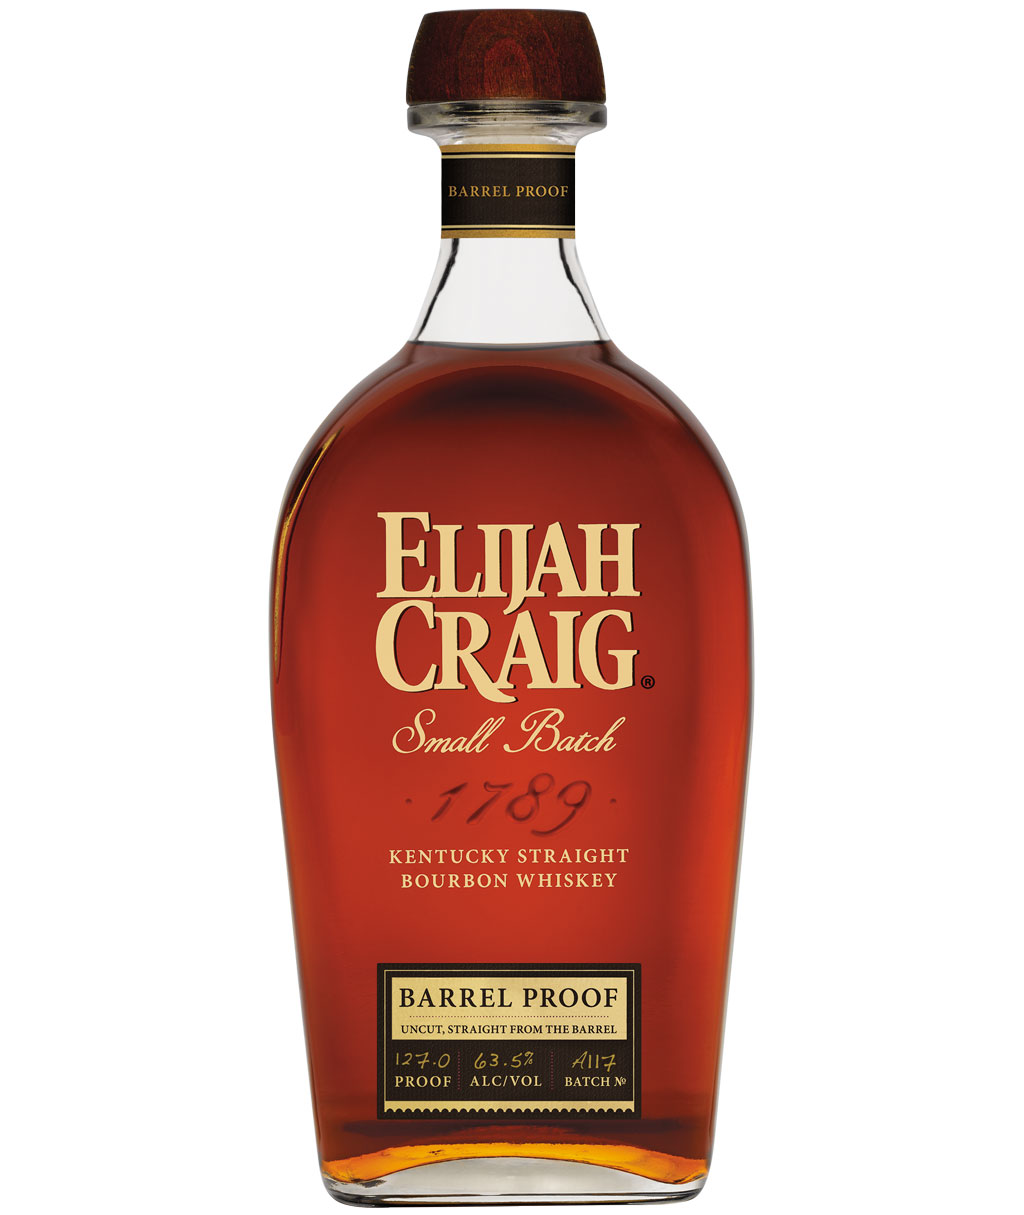 Elijah-craig-barrel-proof-n.jpg